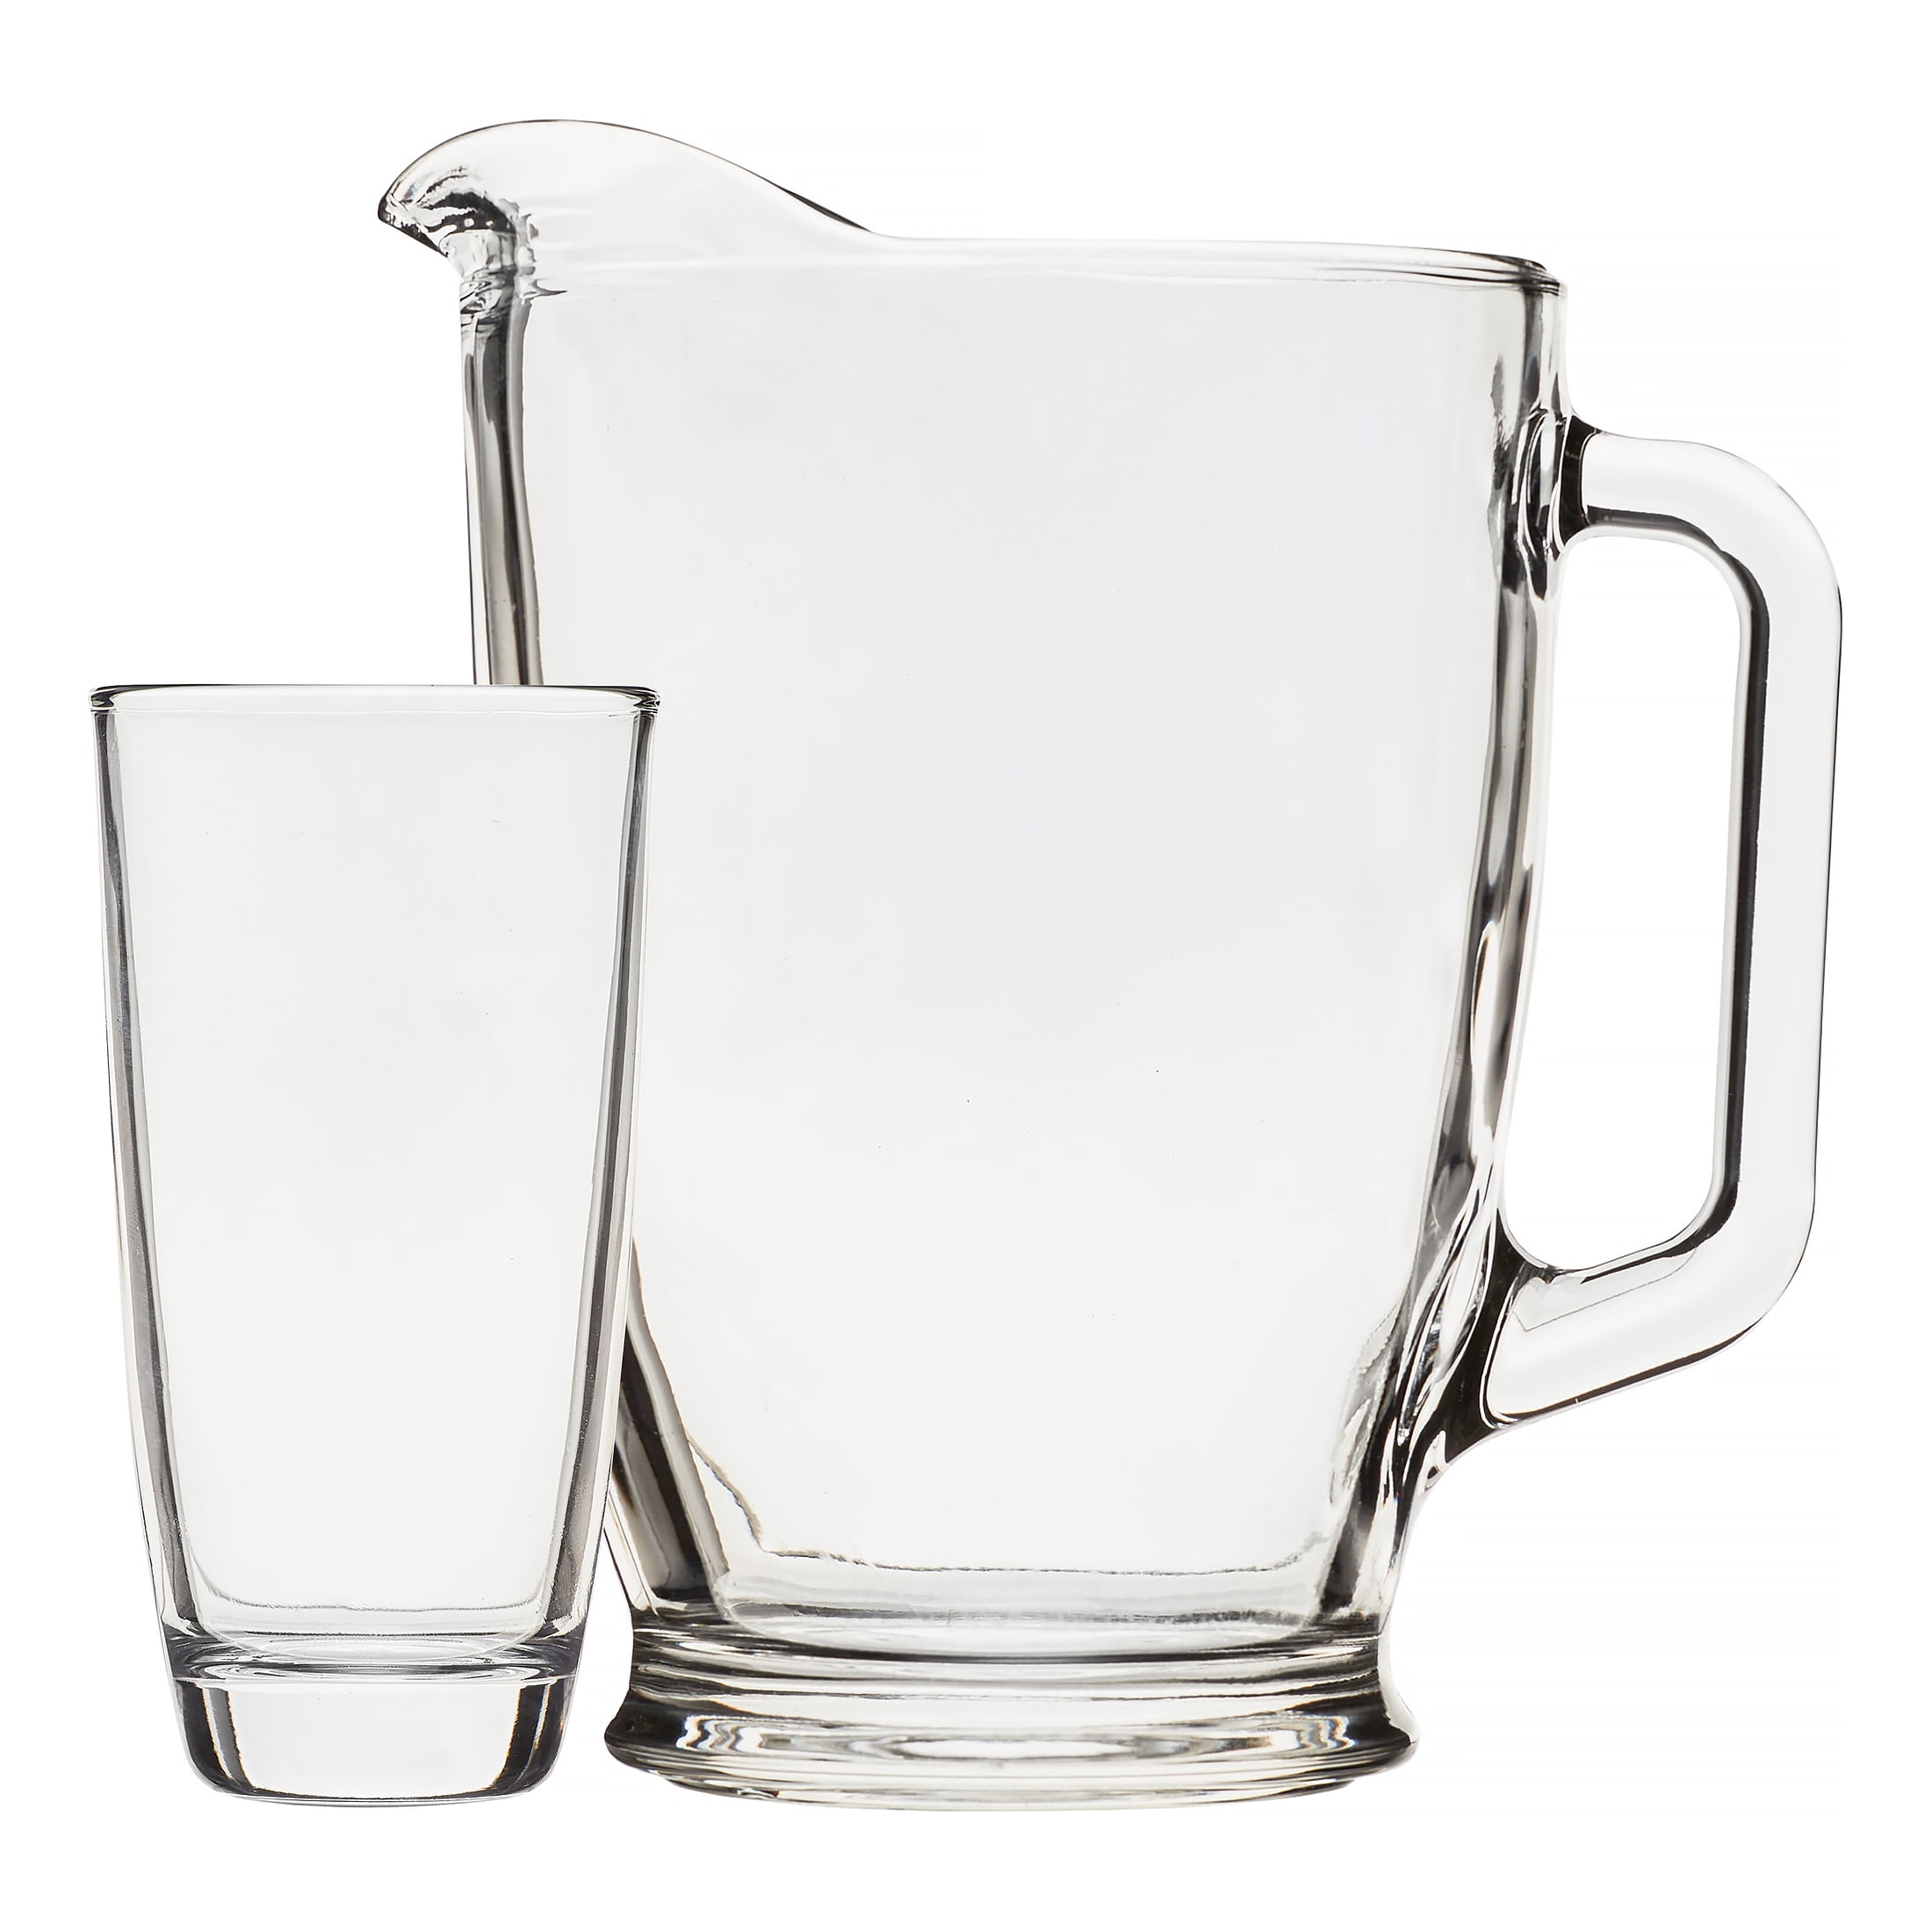 GLASS TUMBLER AND PITCHER SET, 6 PCS, GPH31-1-L7, 1300ML+320ML*6 - deli  glass